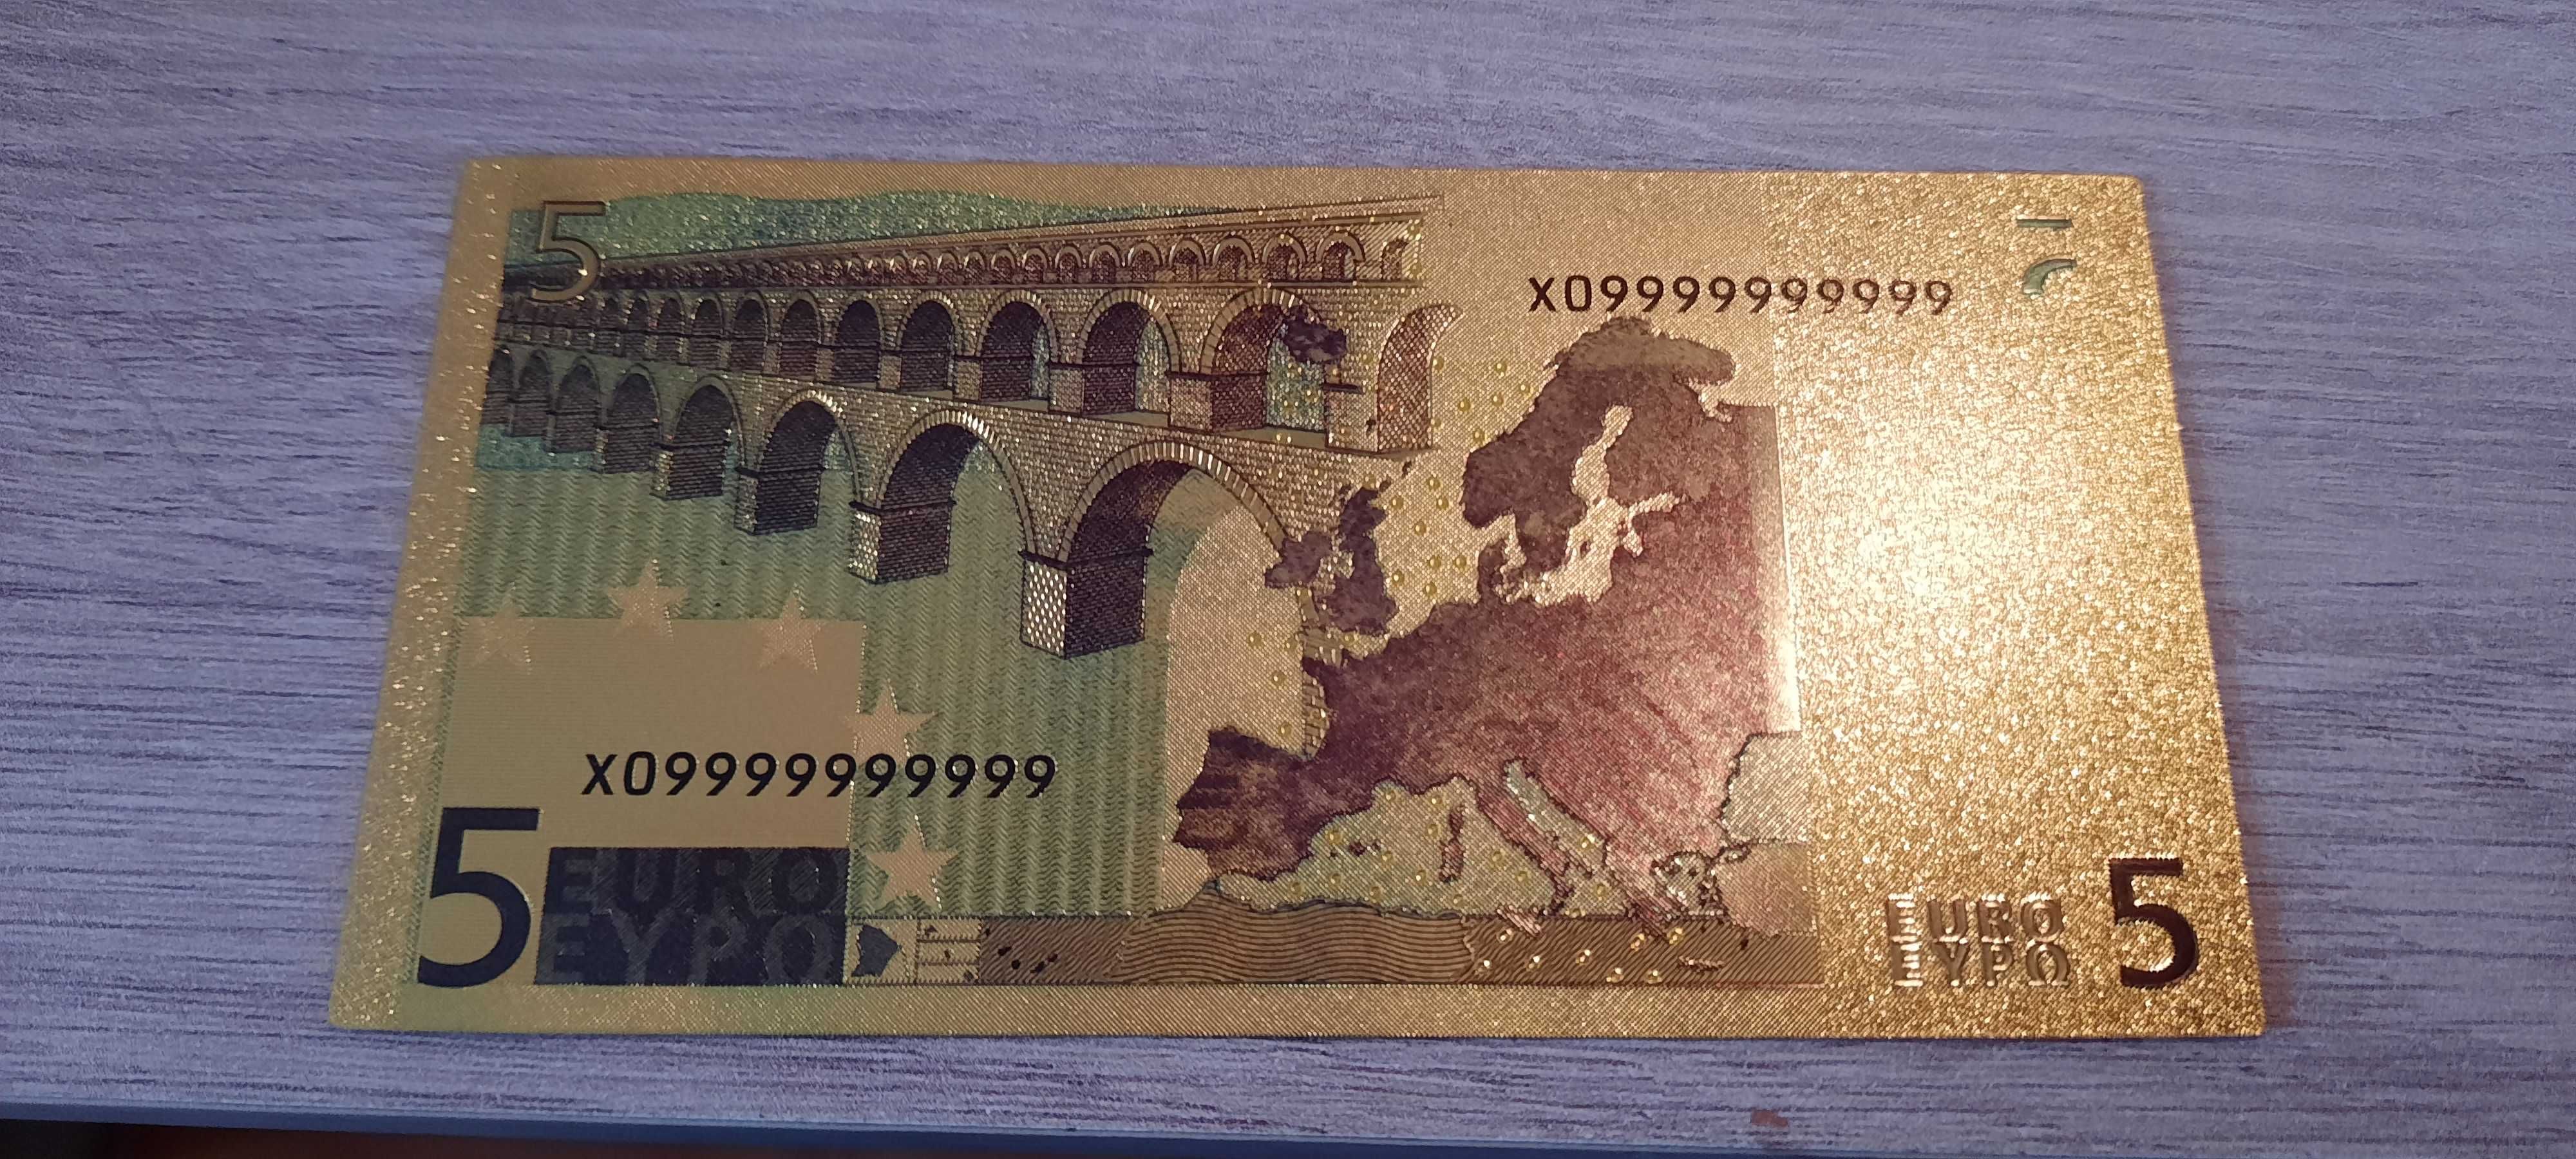 Nota 5 € dourada